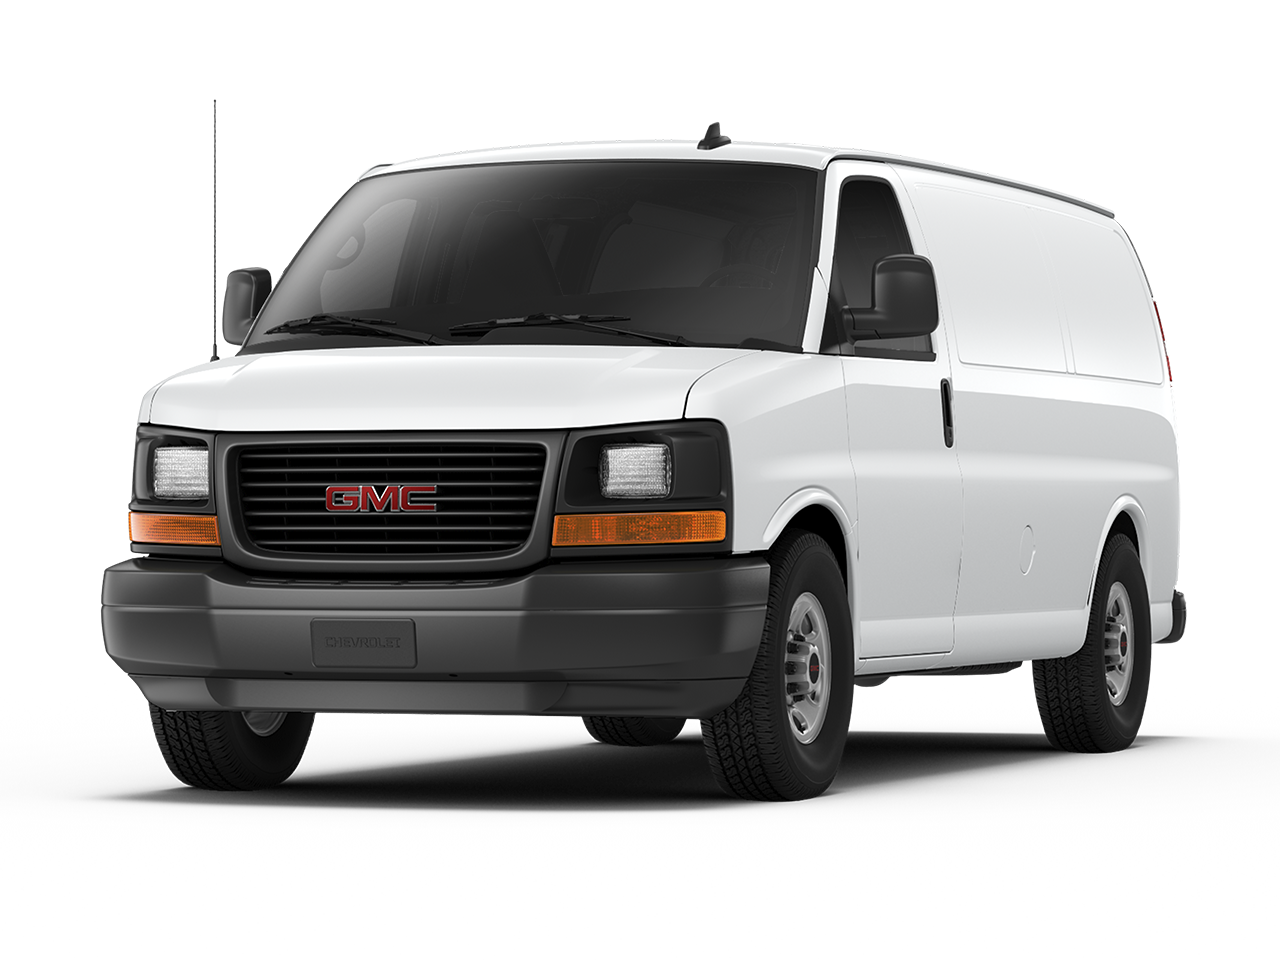 NEW 2018 GMC Savana For Sale | New \u0026 Used GMC Vans Brown Del Rio